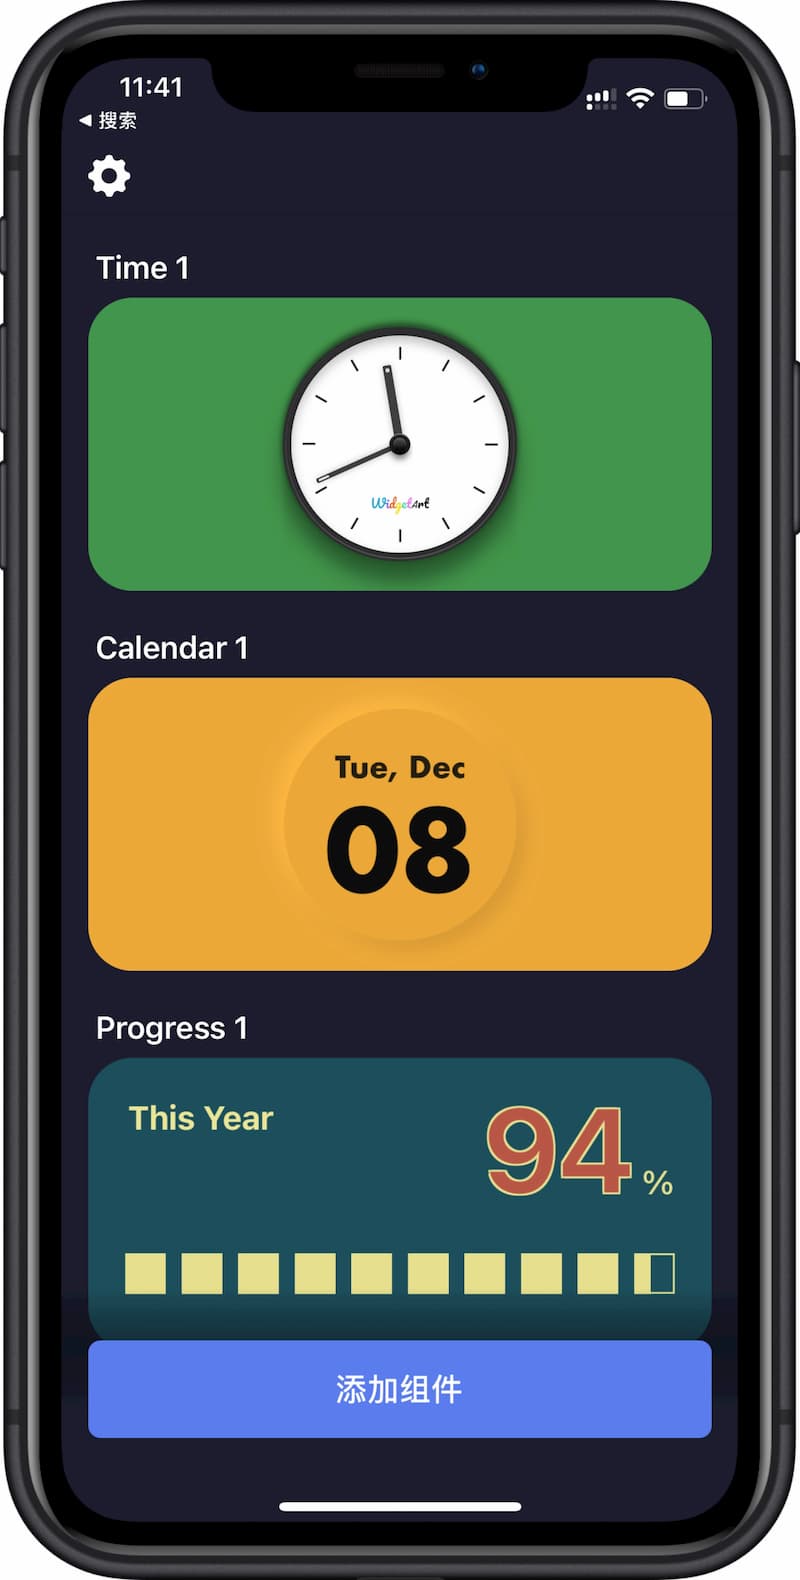 WidgetArt - 时间、照片、纪念日、步数等 7 个漂亮的屏幕小组件[iOS] 3